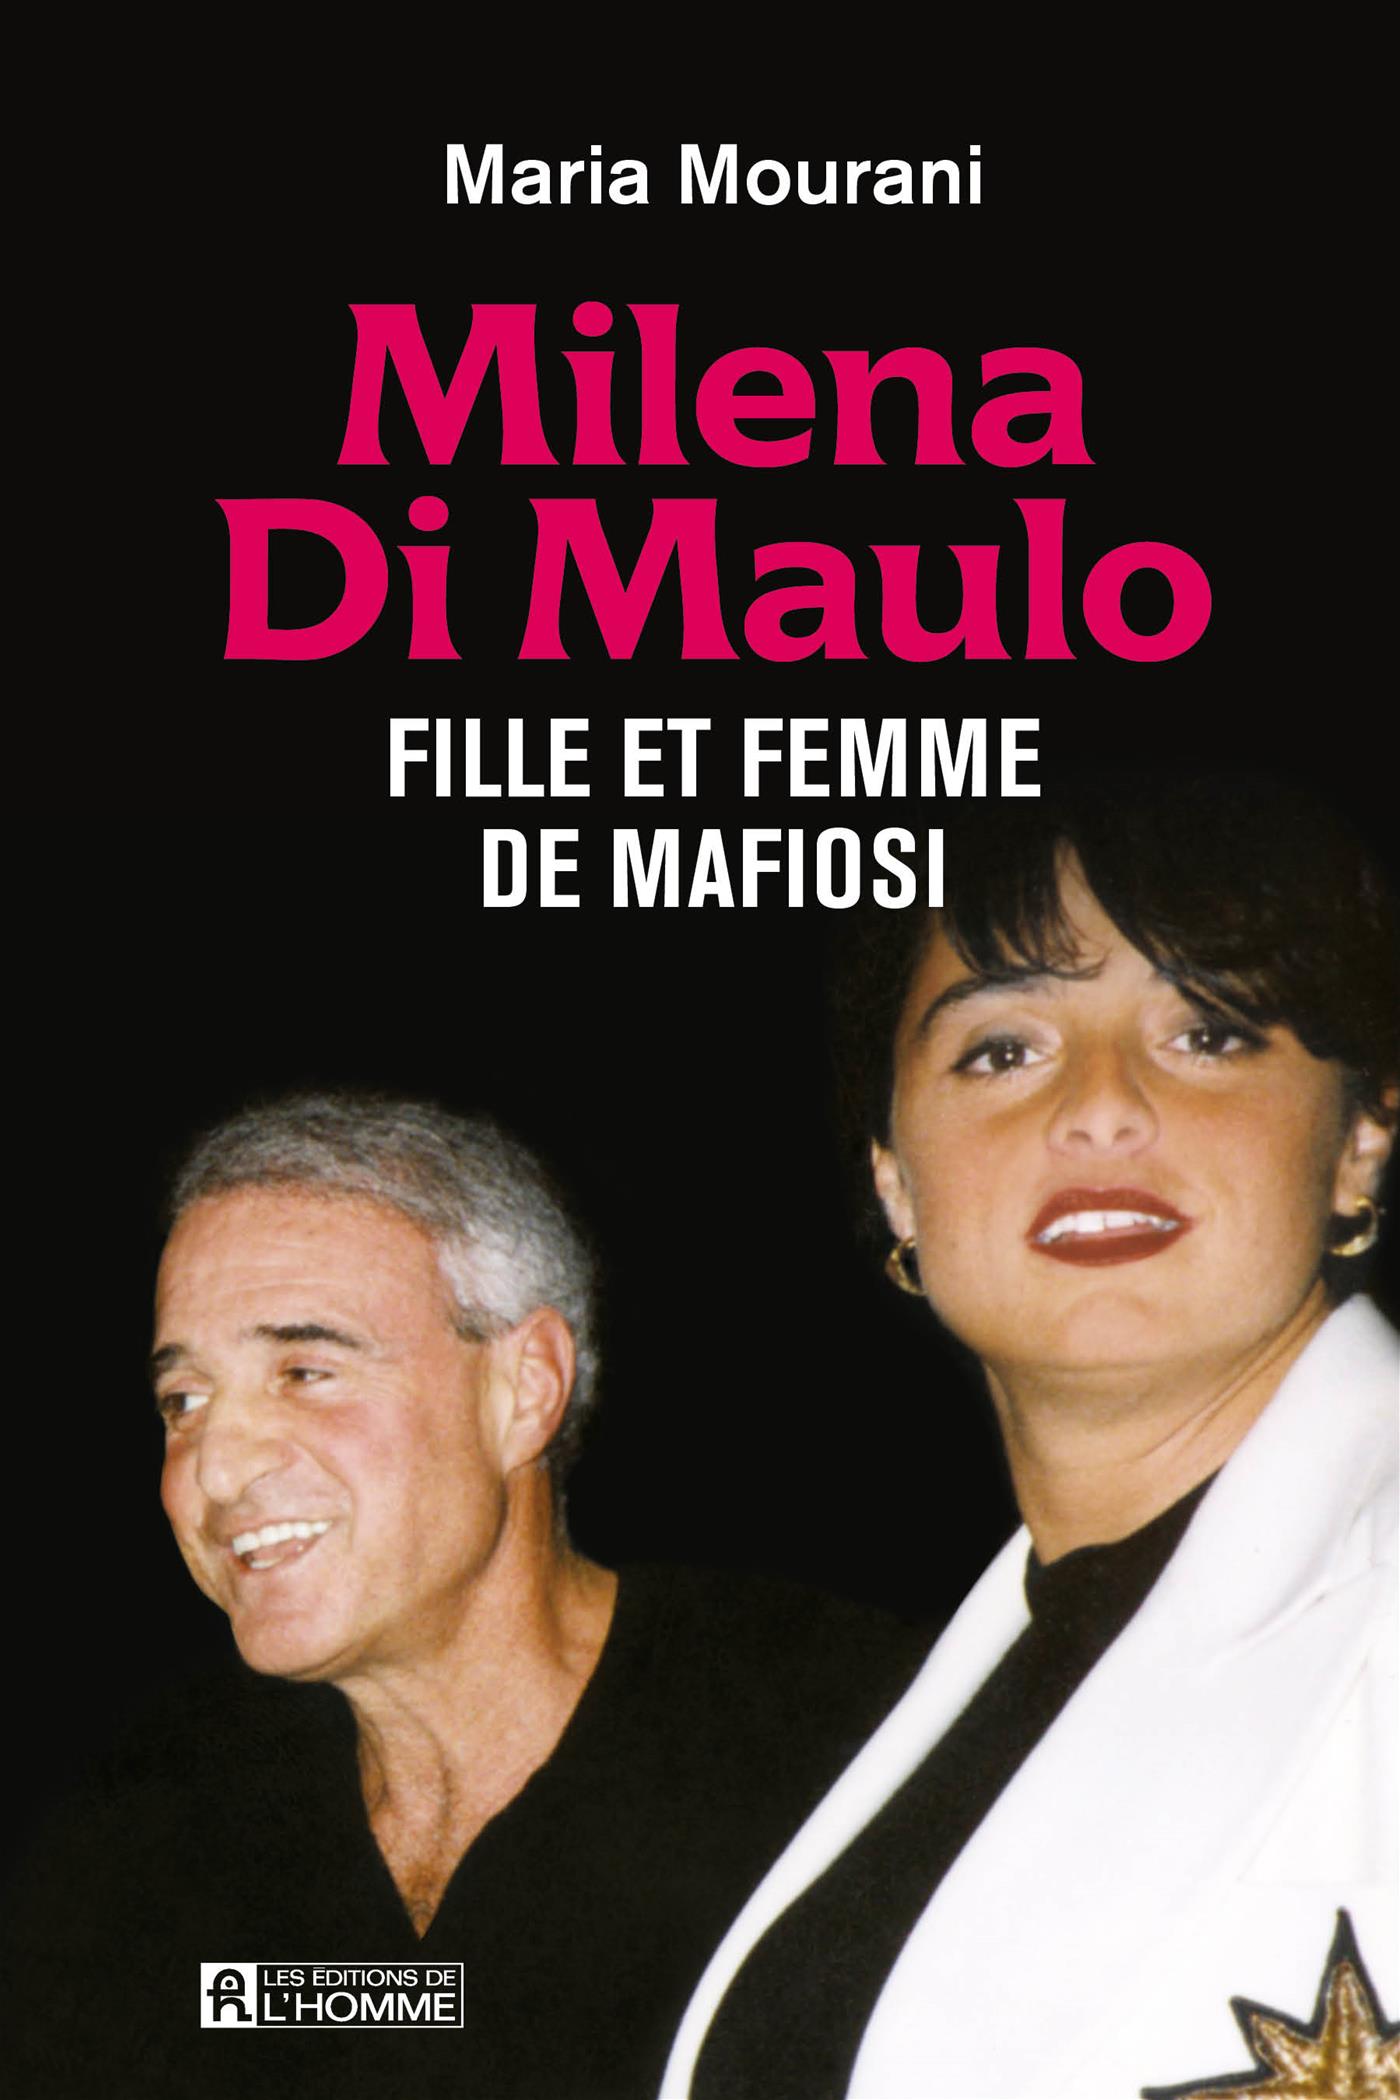 Milena Di Maulo - Fille et femme de mafiosi - Maria Mourani